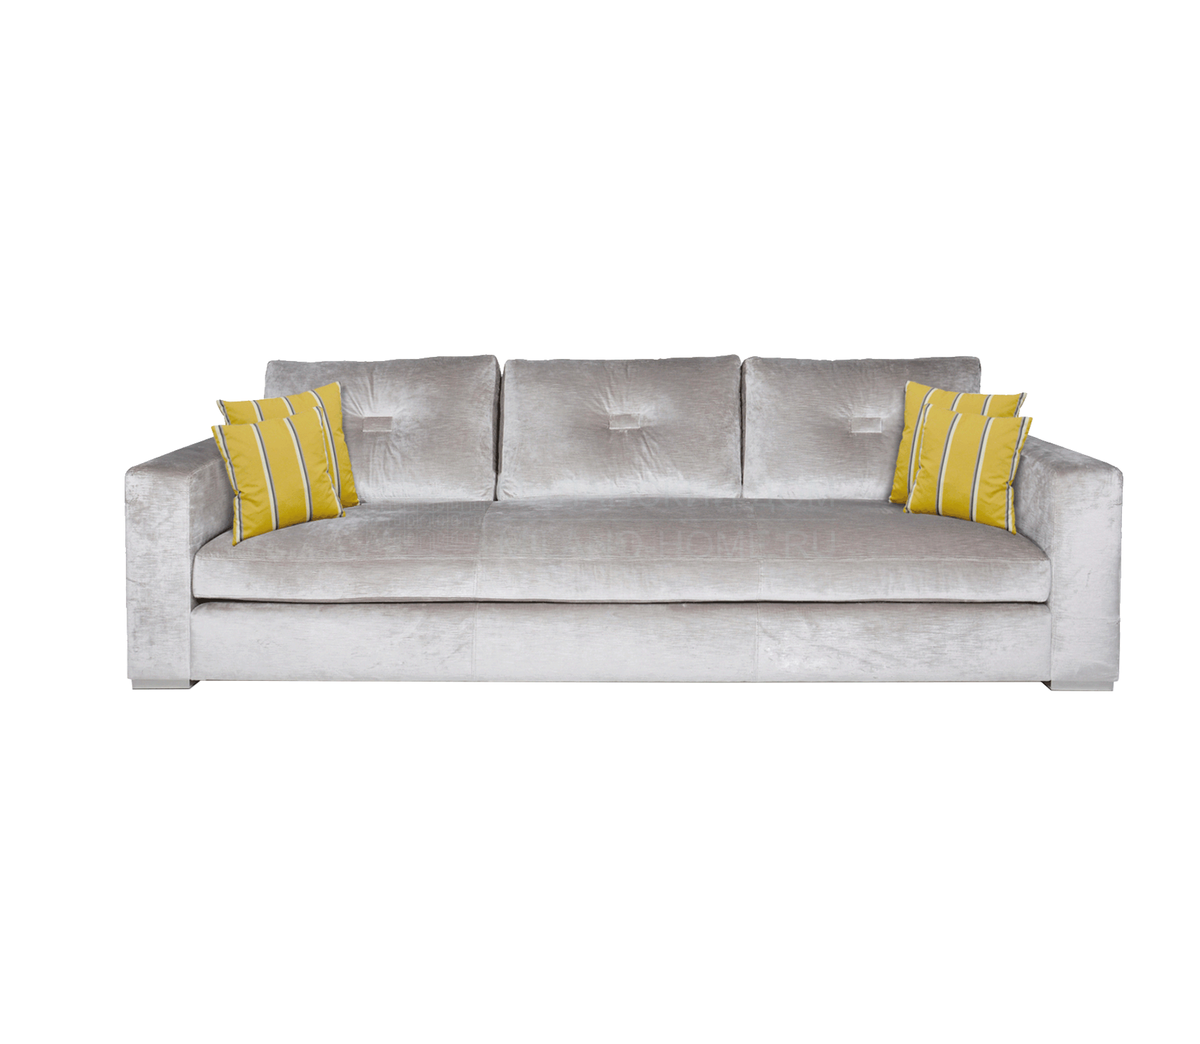 Прямой диван California sofa из Португалии фабрики FRATO